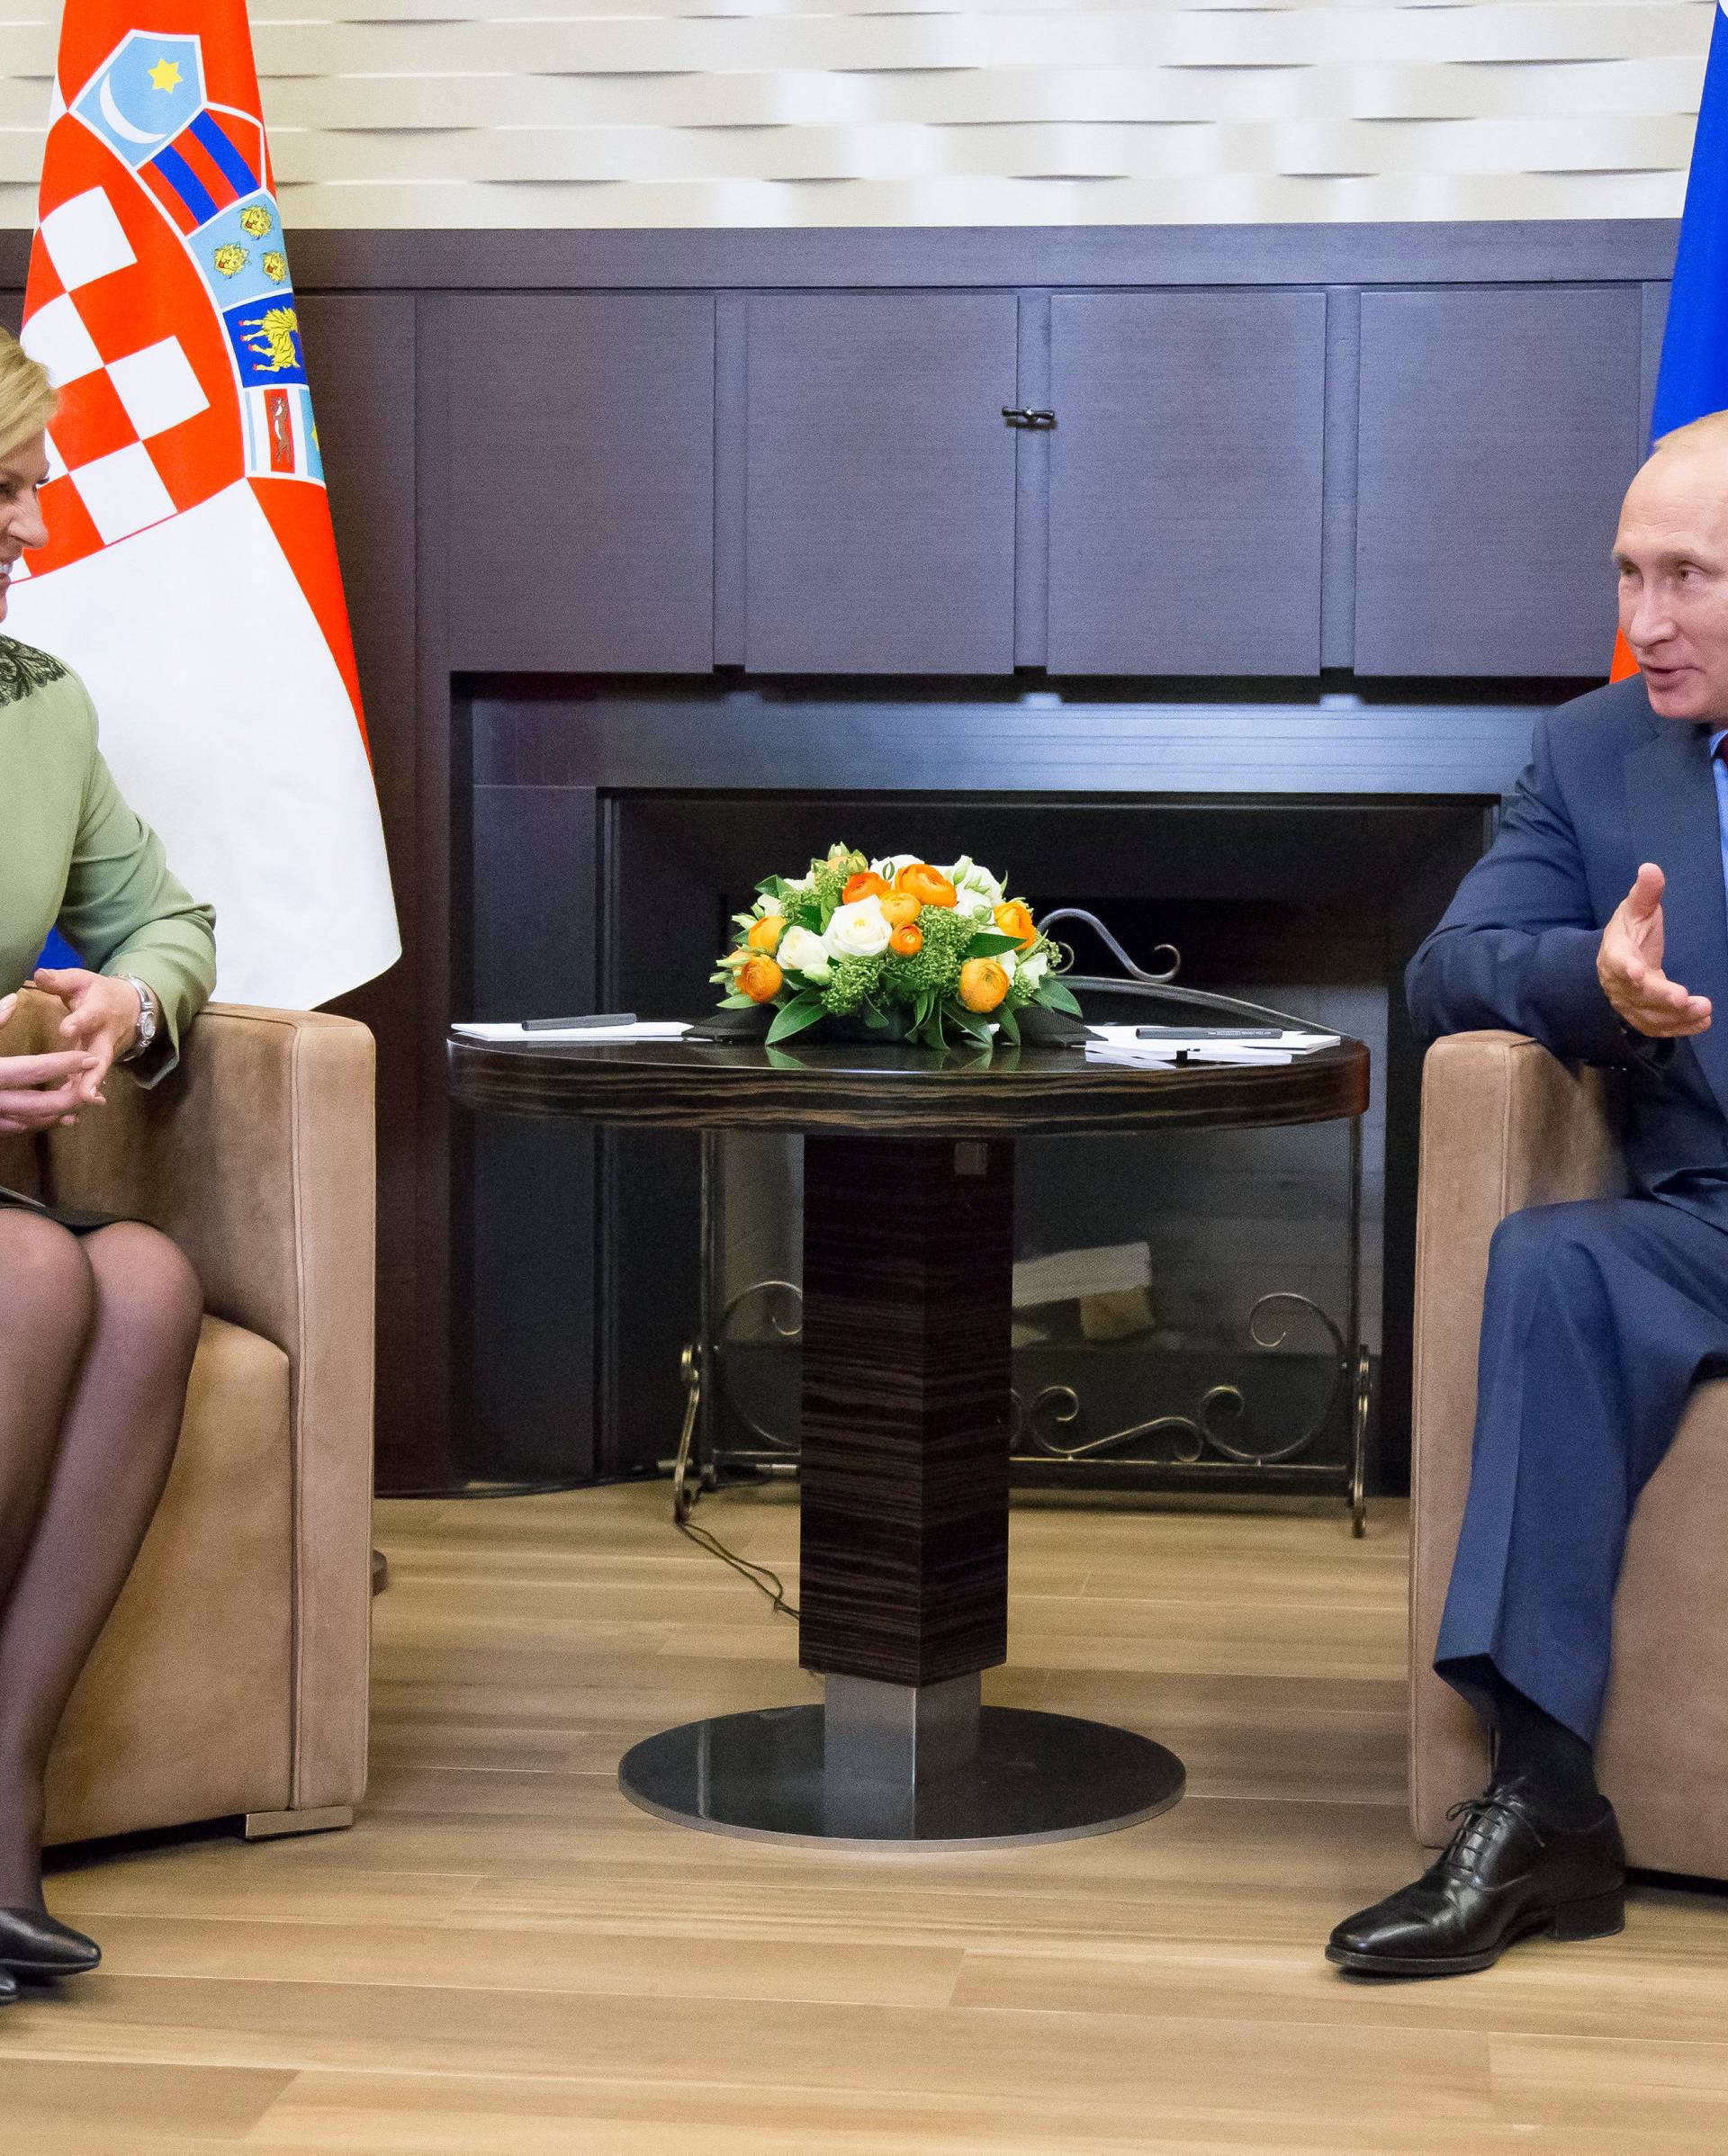 Putin meets with Croatian President Kolinda Grabar-Kitarovic in Sochi